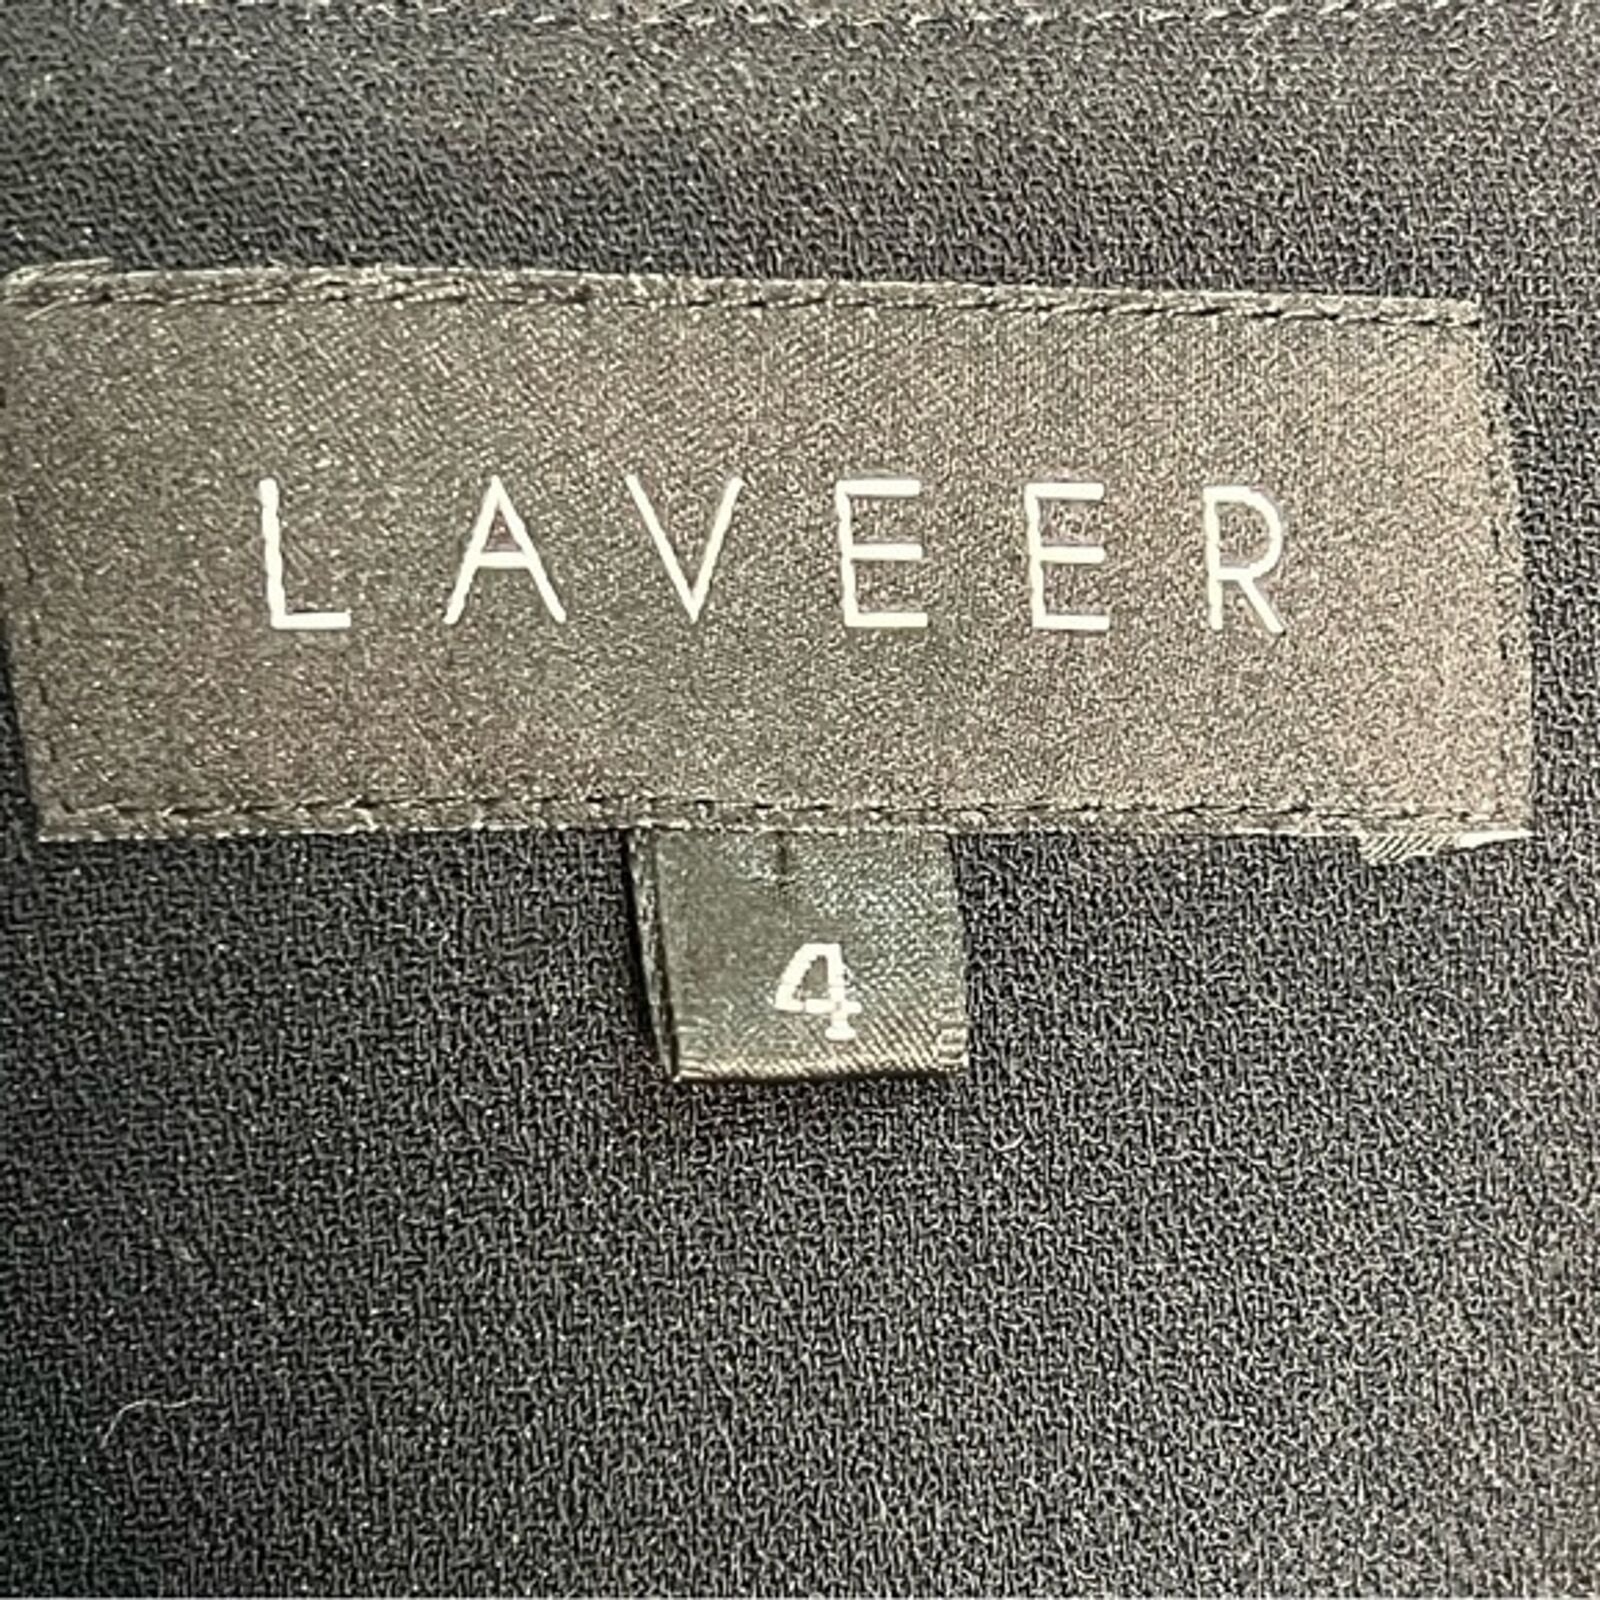 Laveer Kadette Black Double Breasted Blazer Jacket Size 4